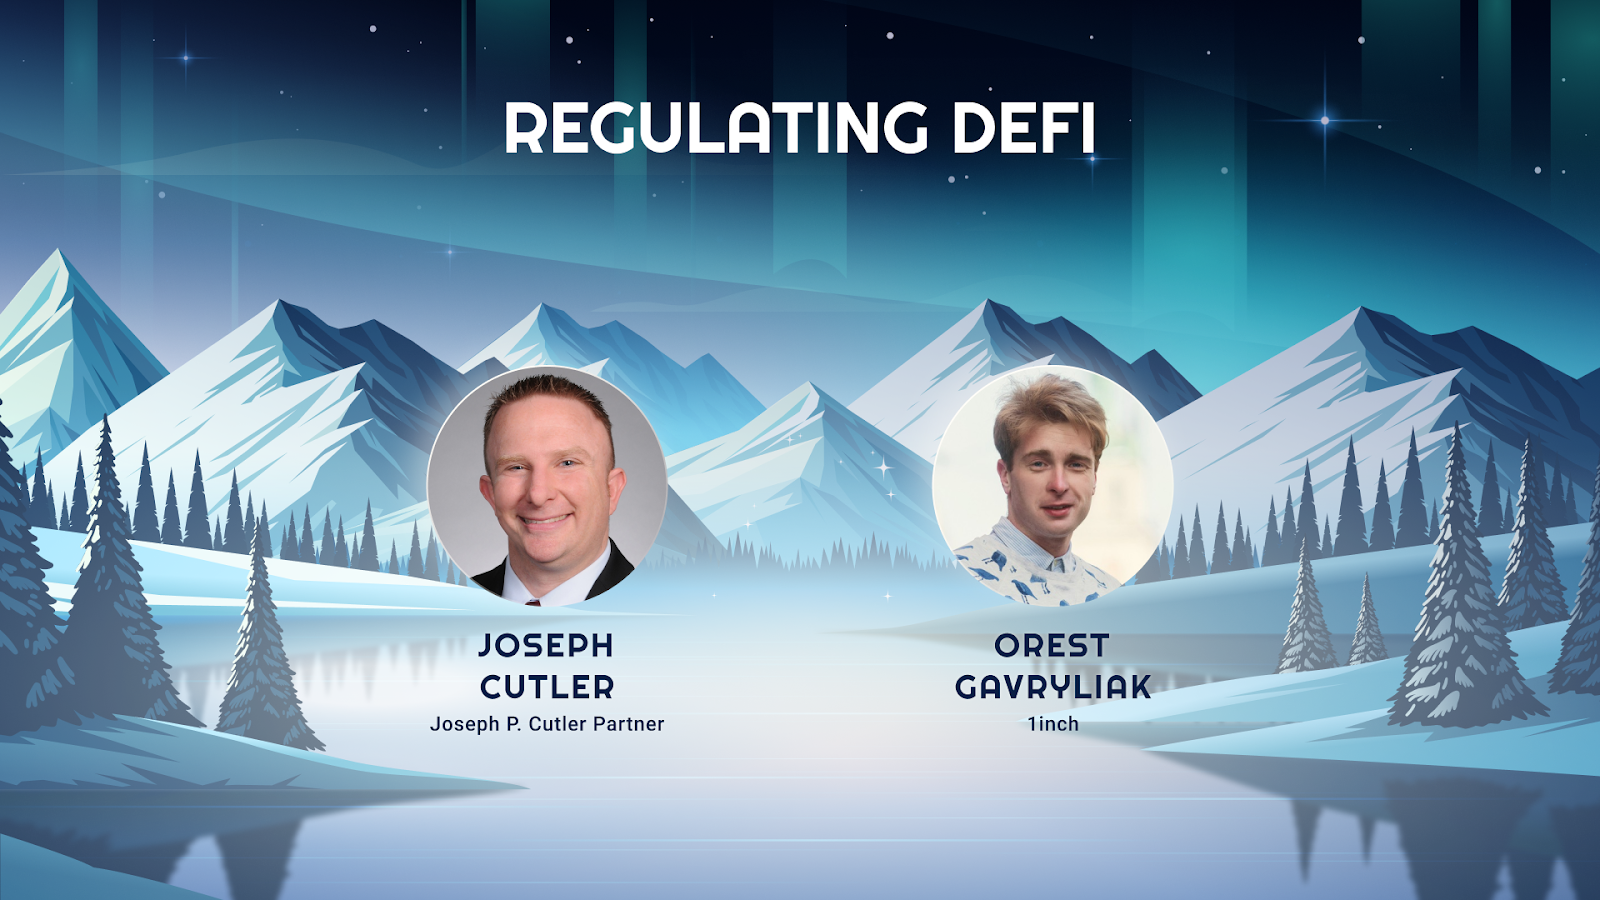 The 1inch Davos meetup: Regulating DeFi